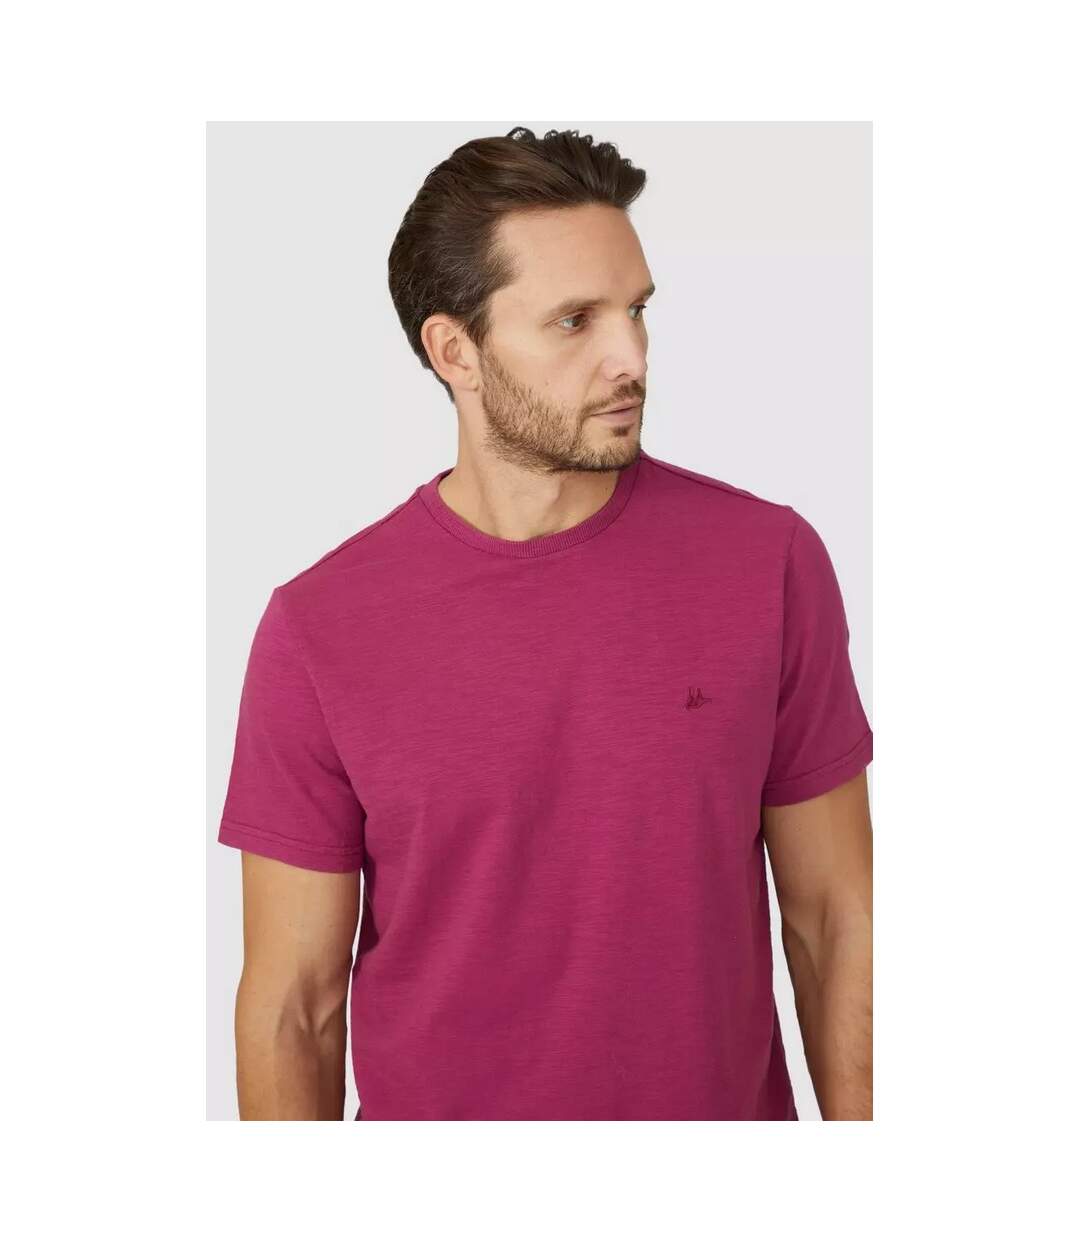 Mantaray - T-shirt - Homme (Rose foncé) - UTDH2946